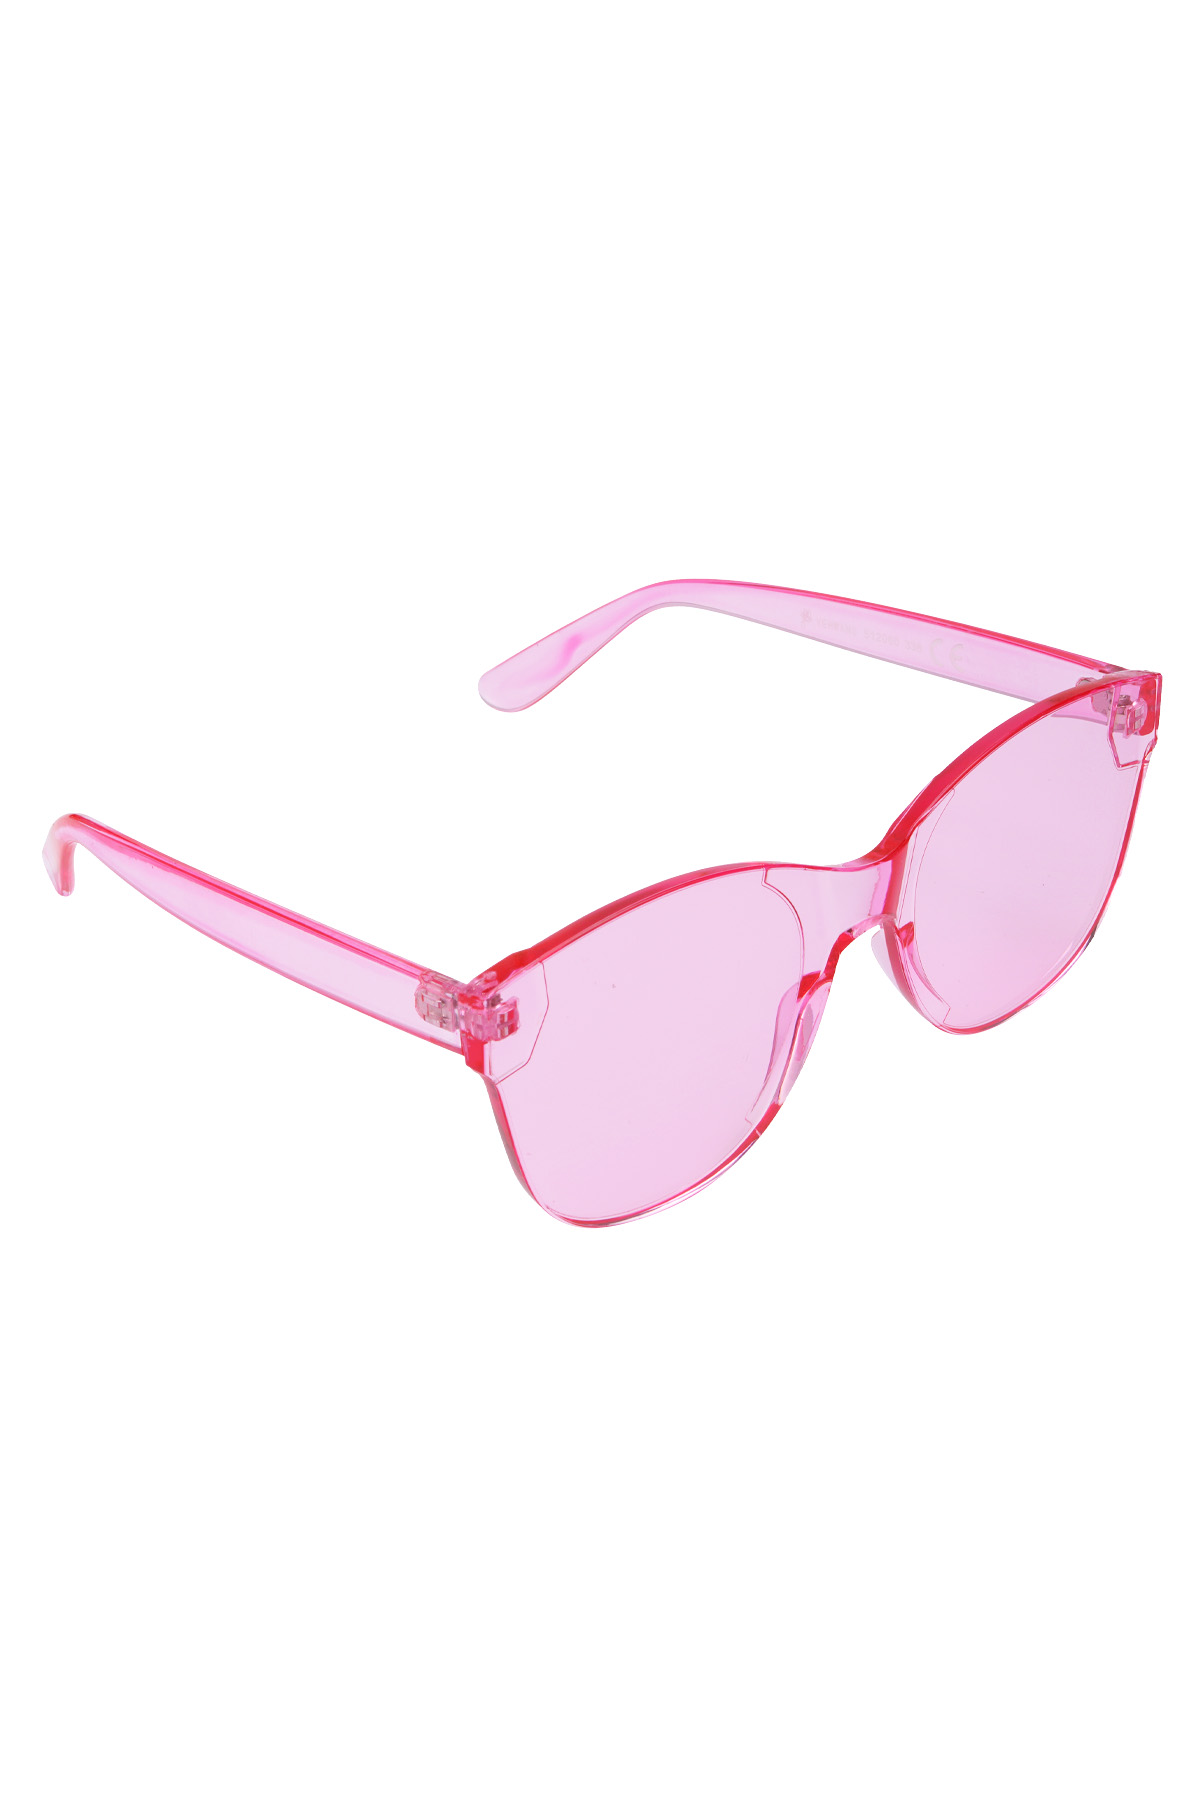 Single-color trendy sunglasses - blue h5 Picture5